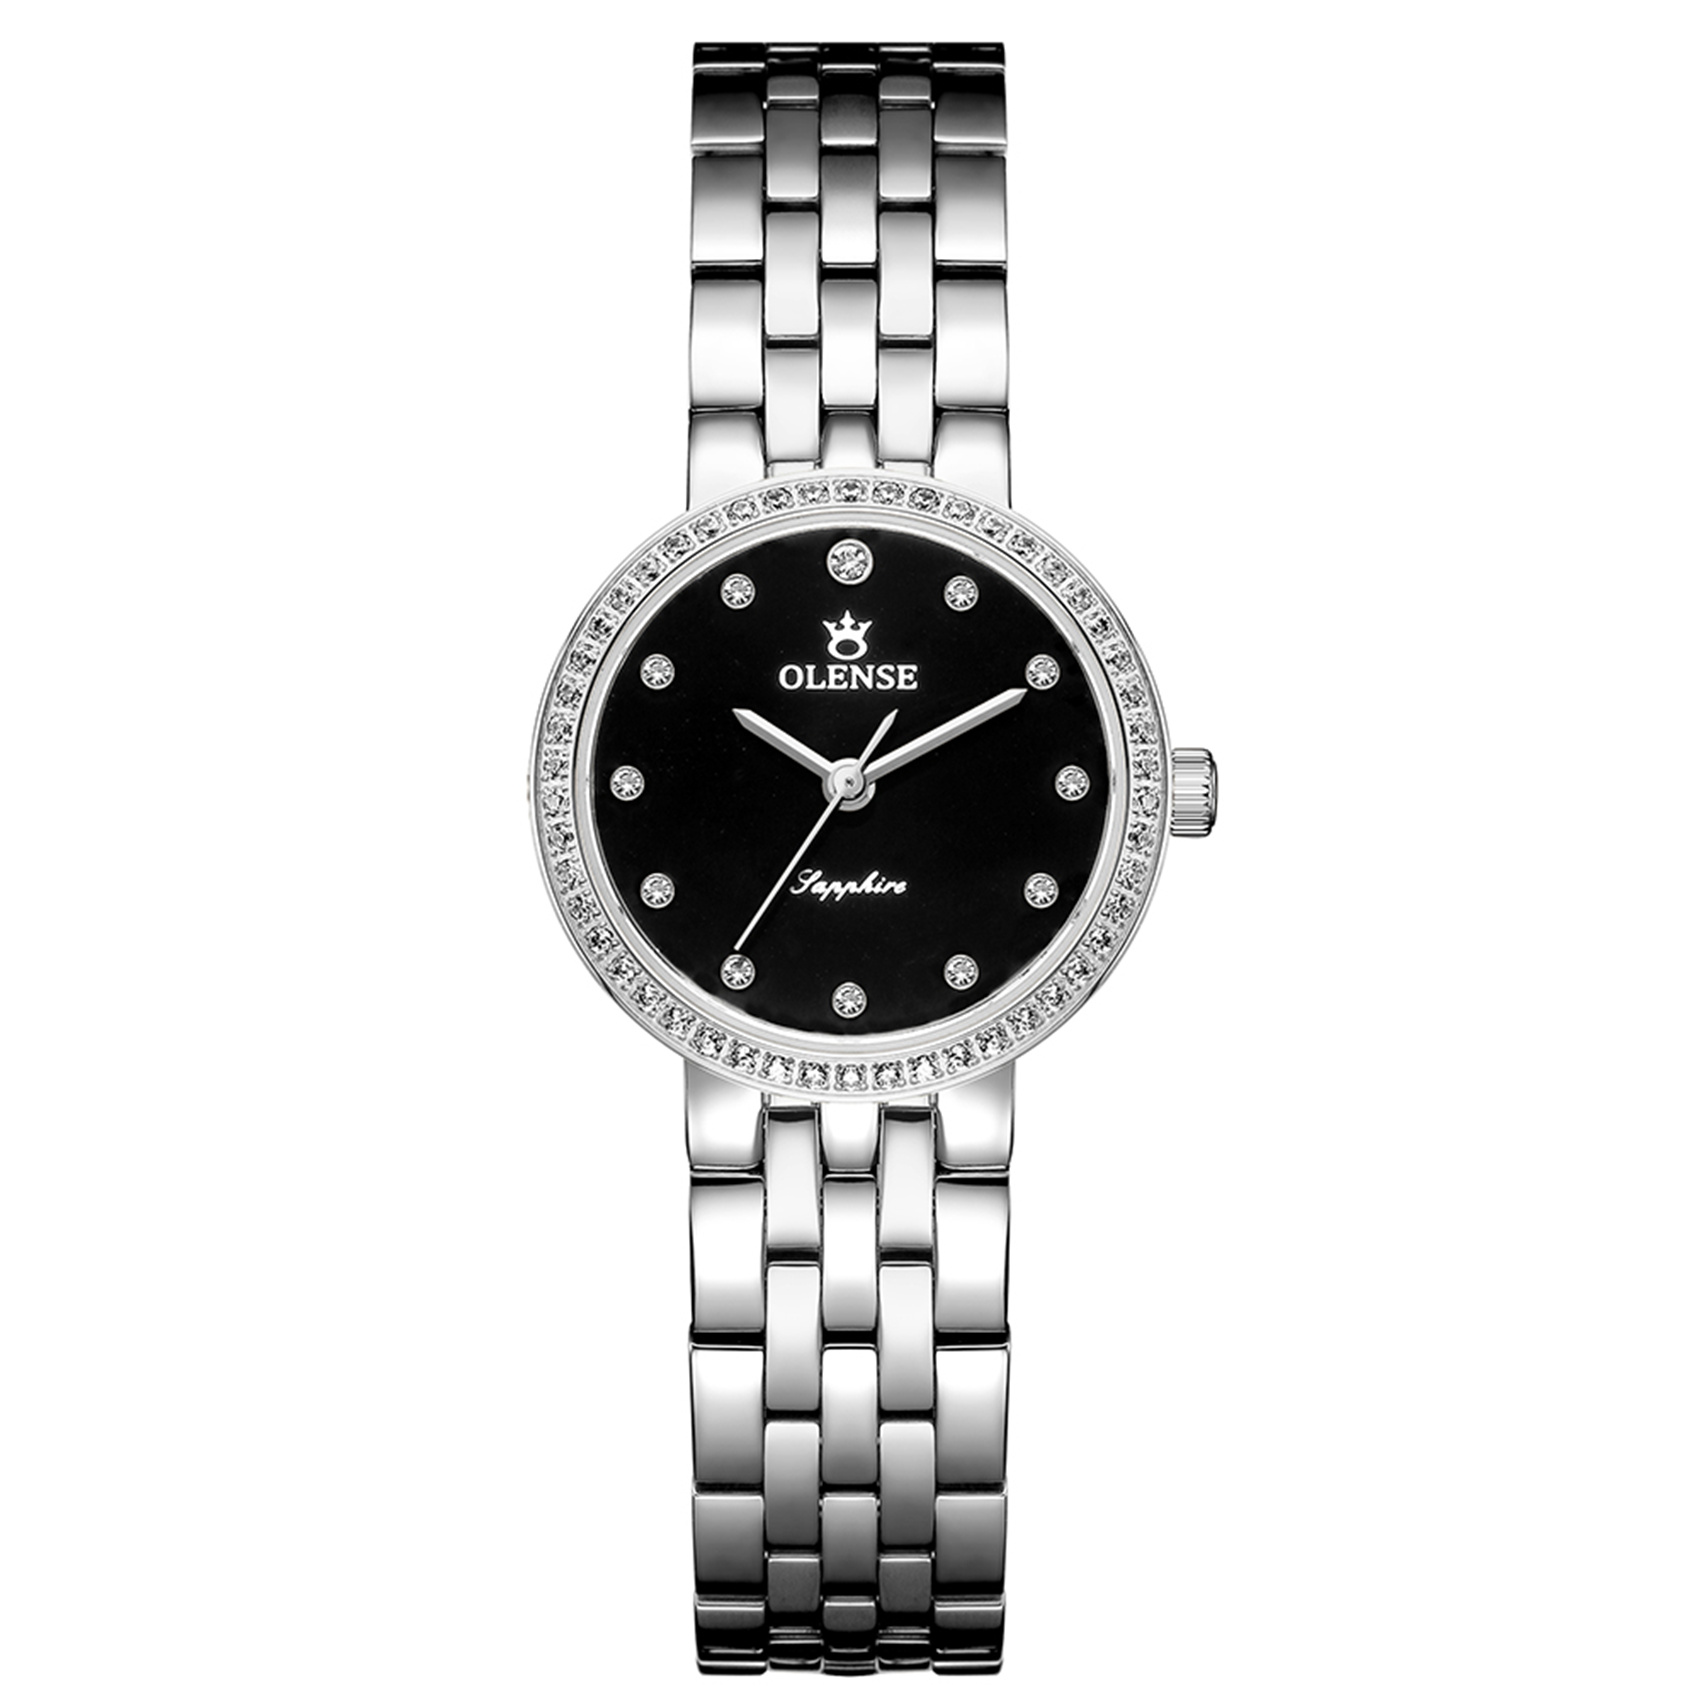 OLENSE - Luxury Watch for Women, Stainless Steel, 25mm, Silver & Black